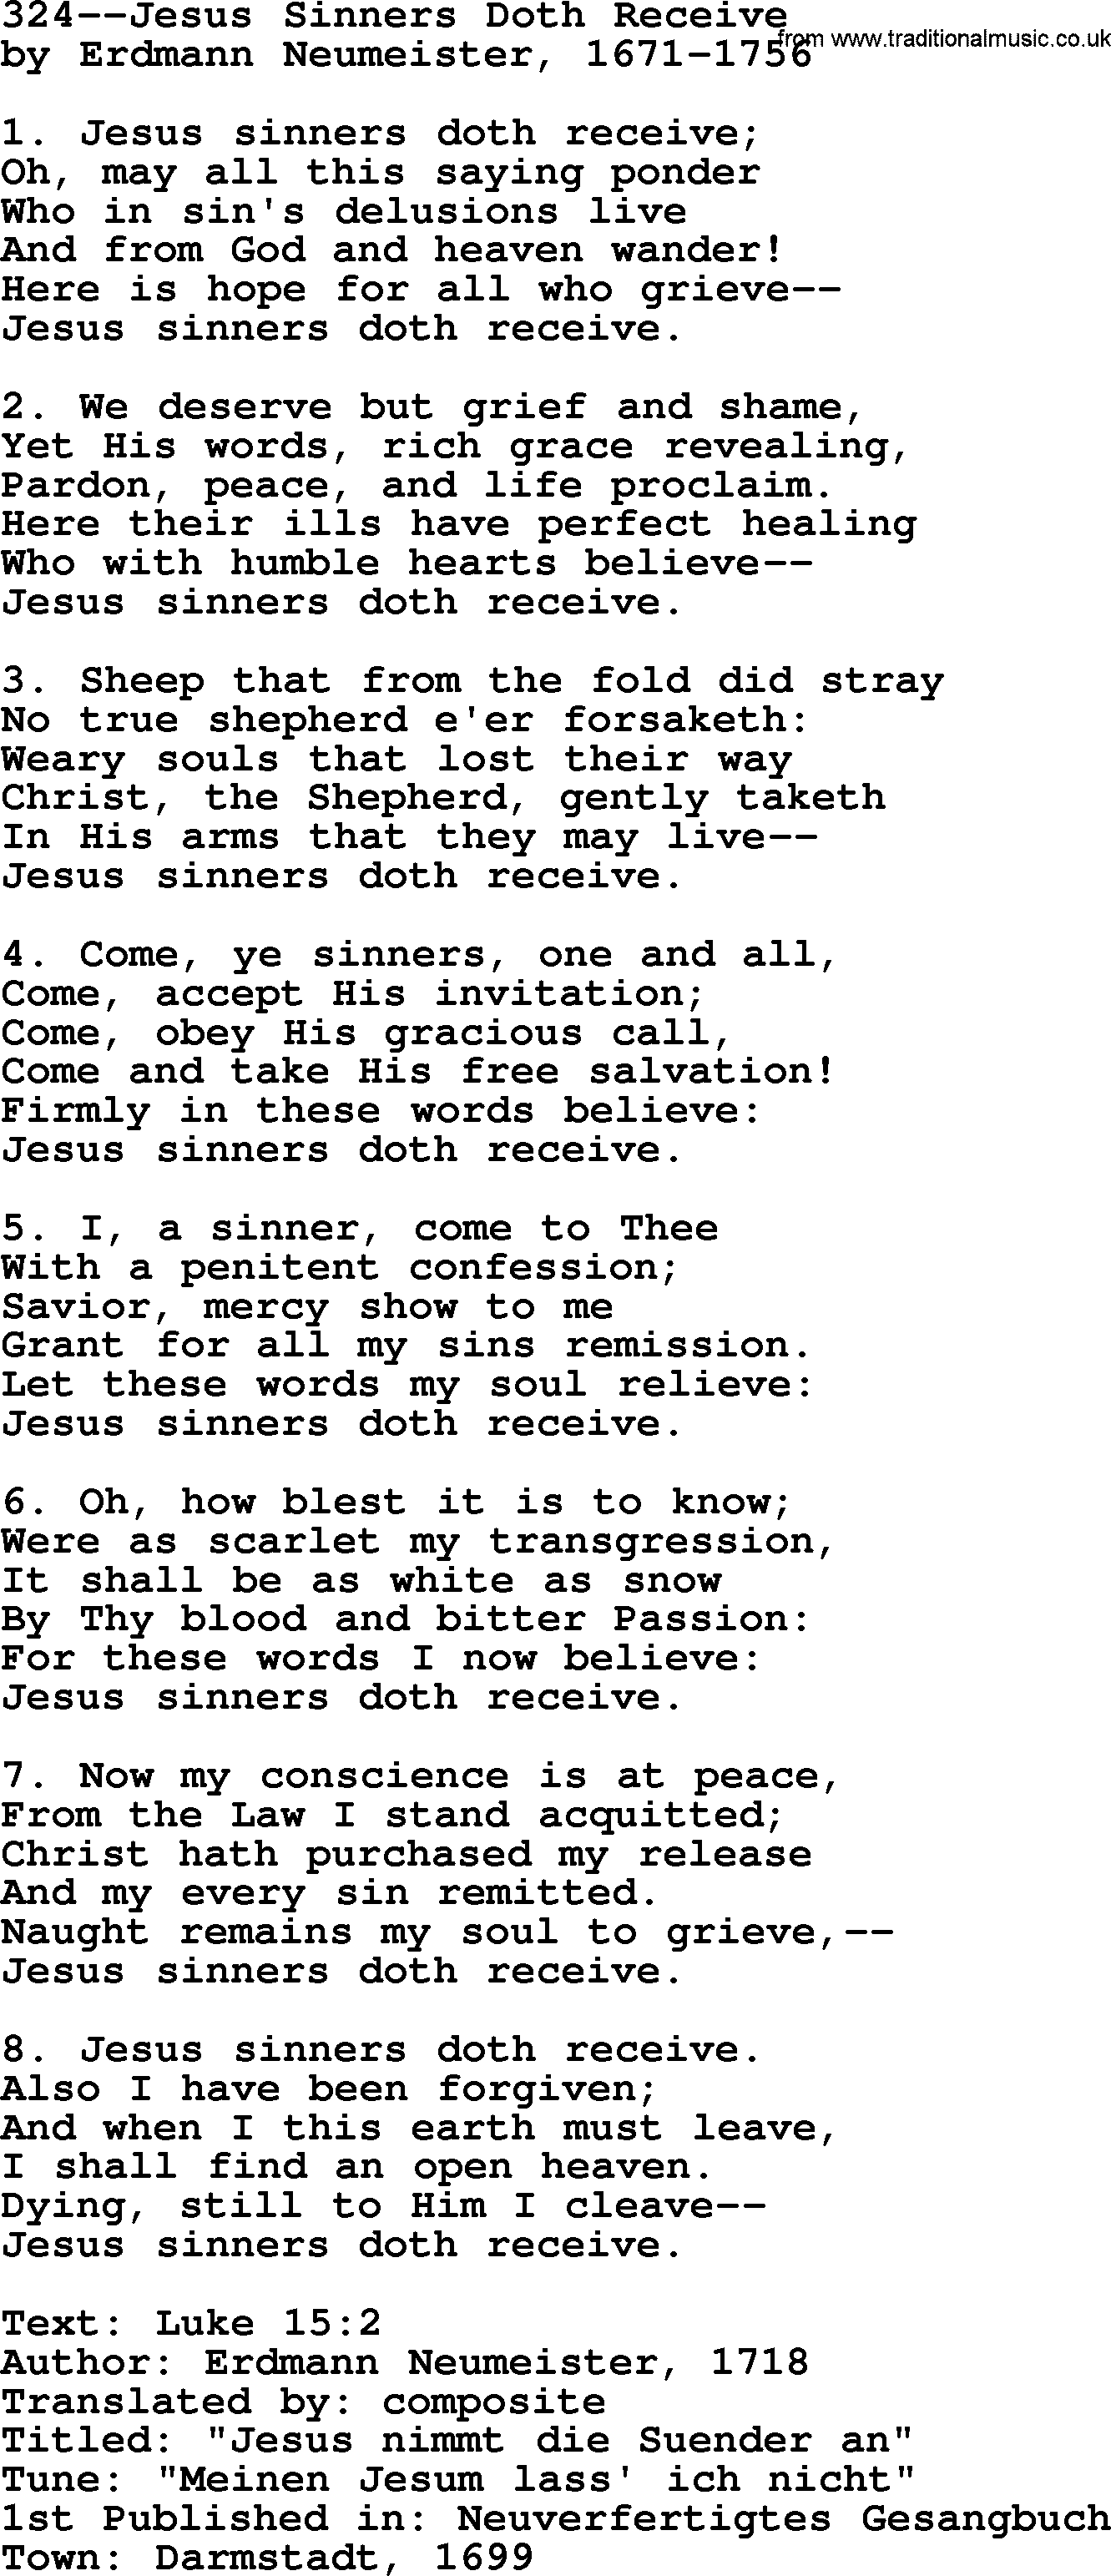 Lutheran Hymn: 324--Jesus Sinners Doth Receive.txt lyrics with PDF